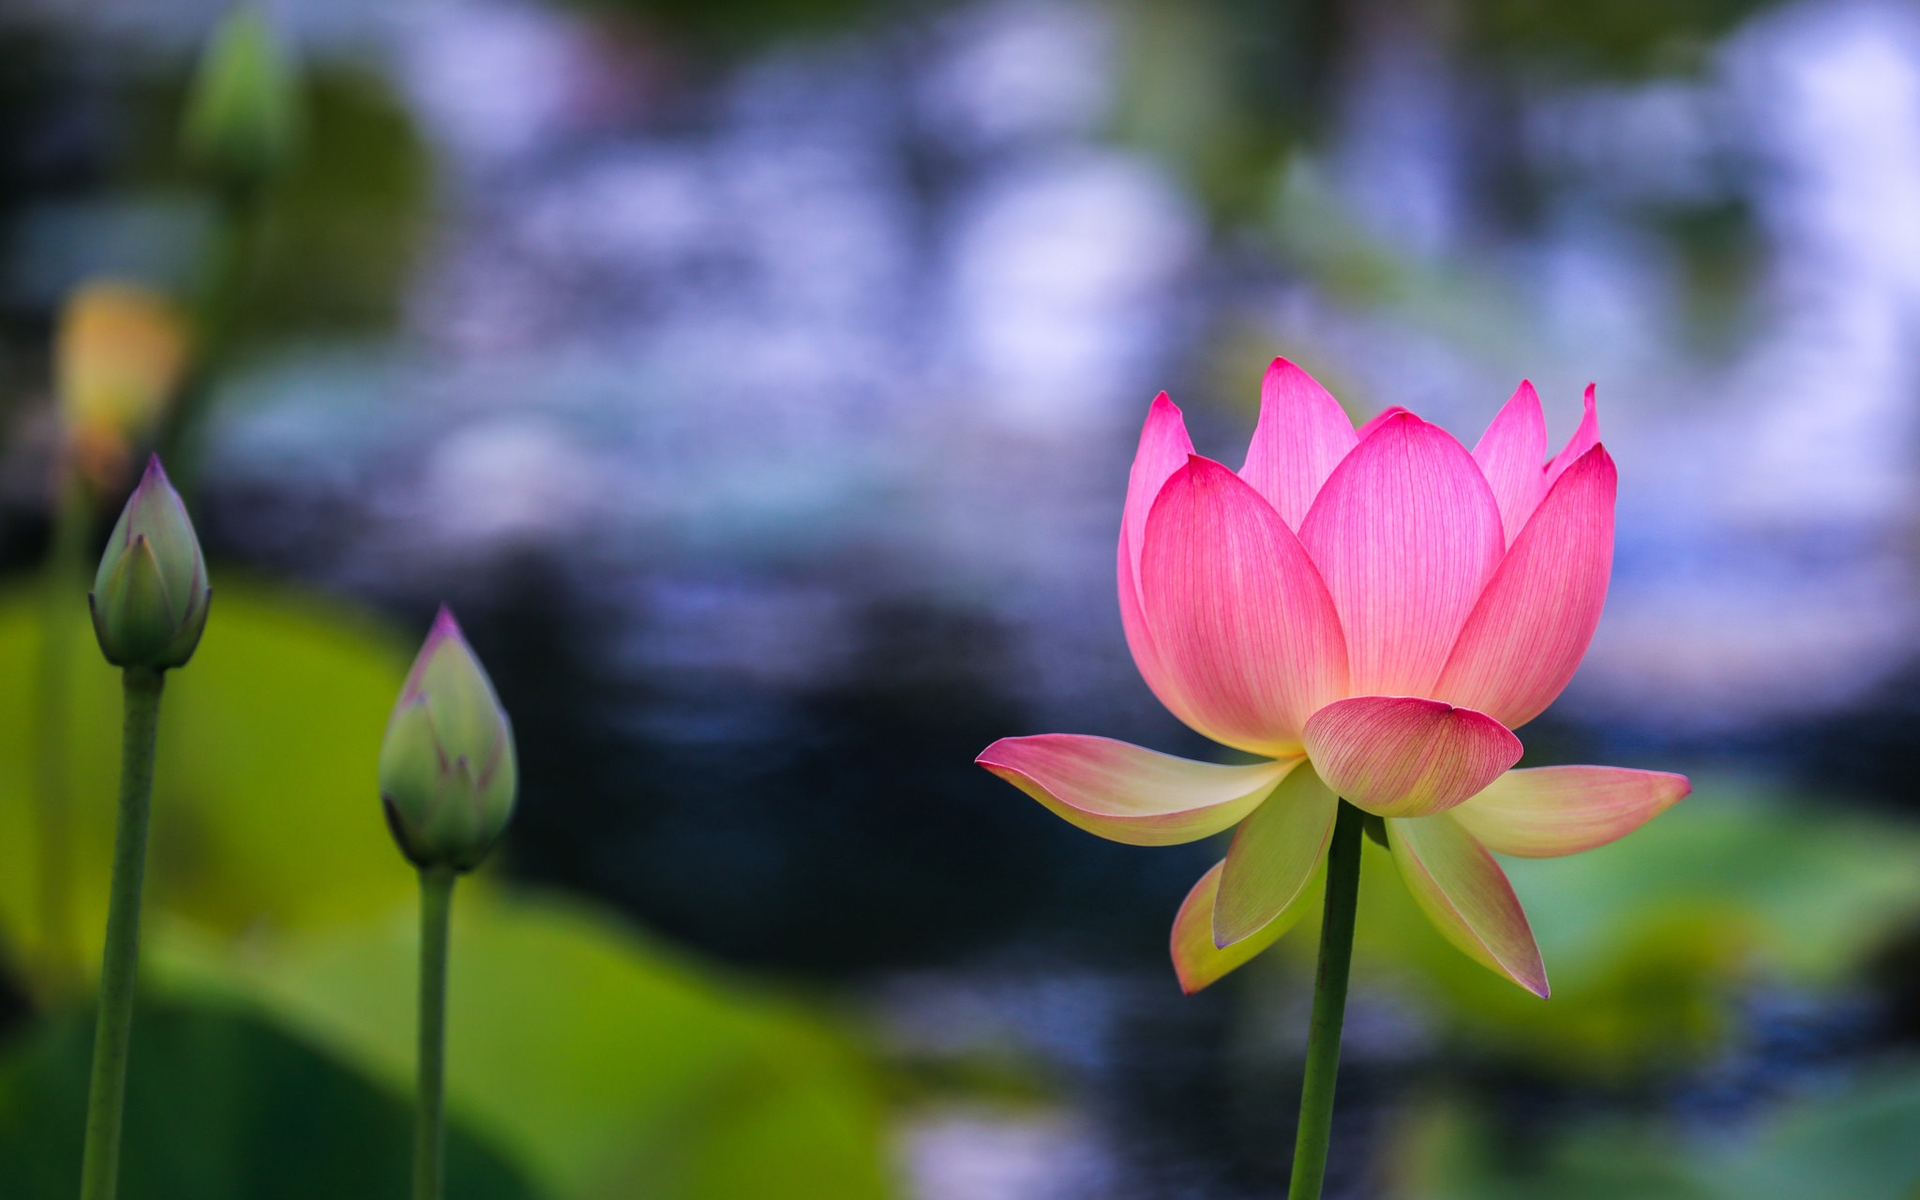 Image: Plant, Lotus, leaf, Bud, blur, water